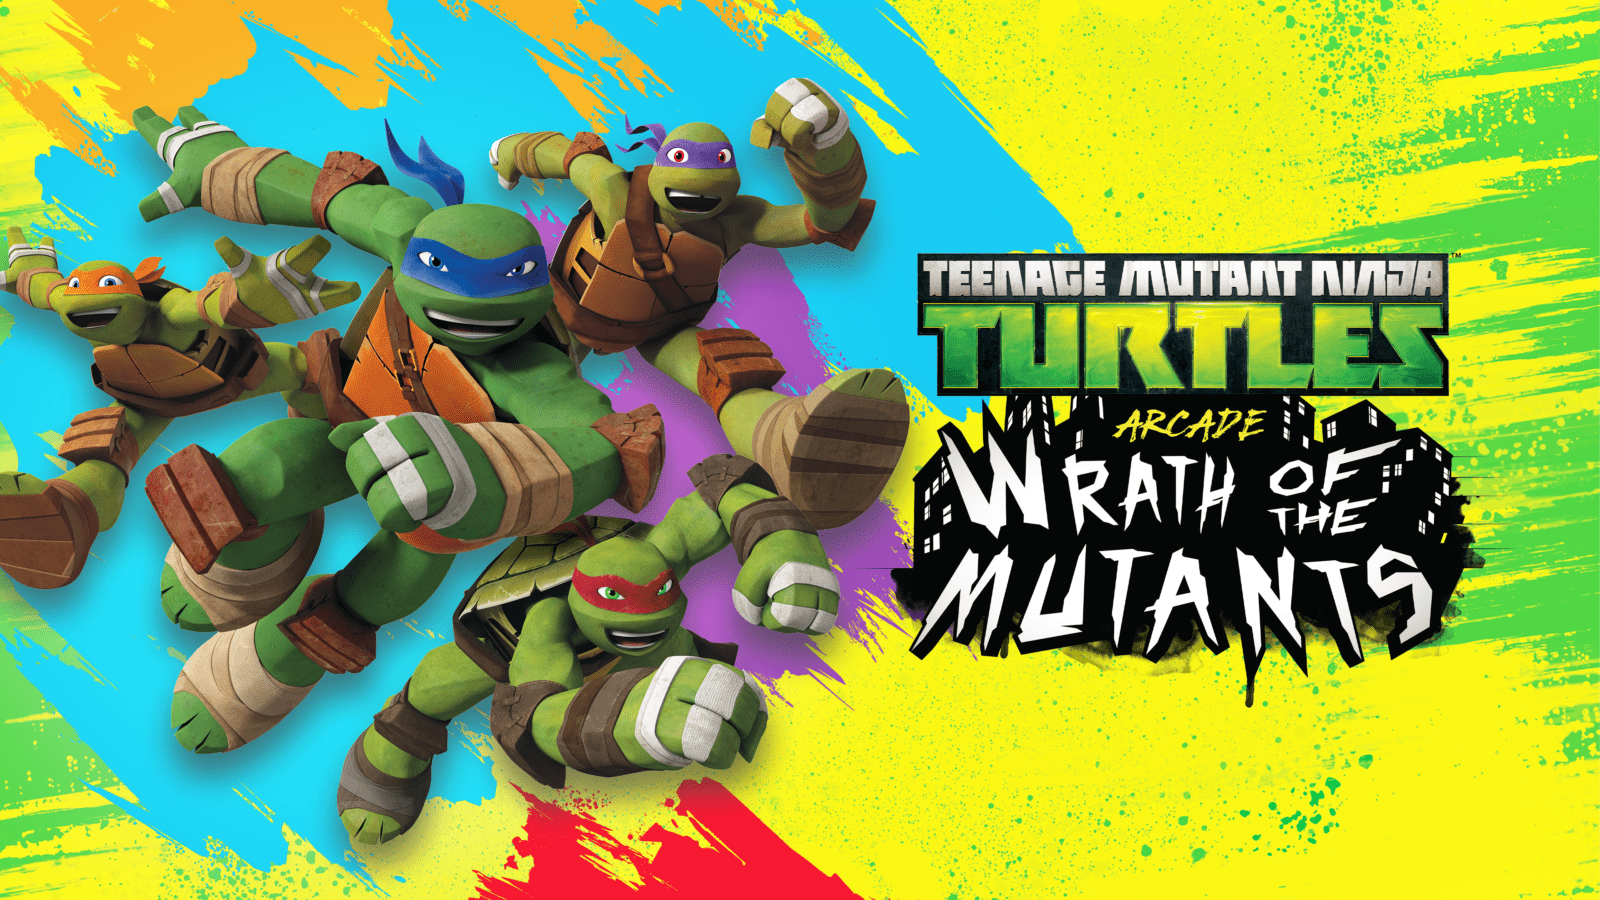 Teenage Mutant Ninja Turtles Arcade: Wrath of the Mutants é anunciado para Nintendo Switch